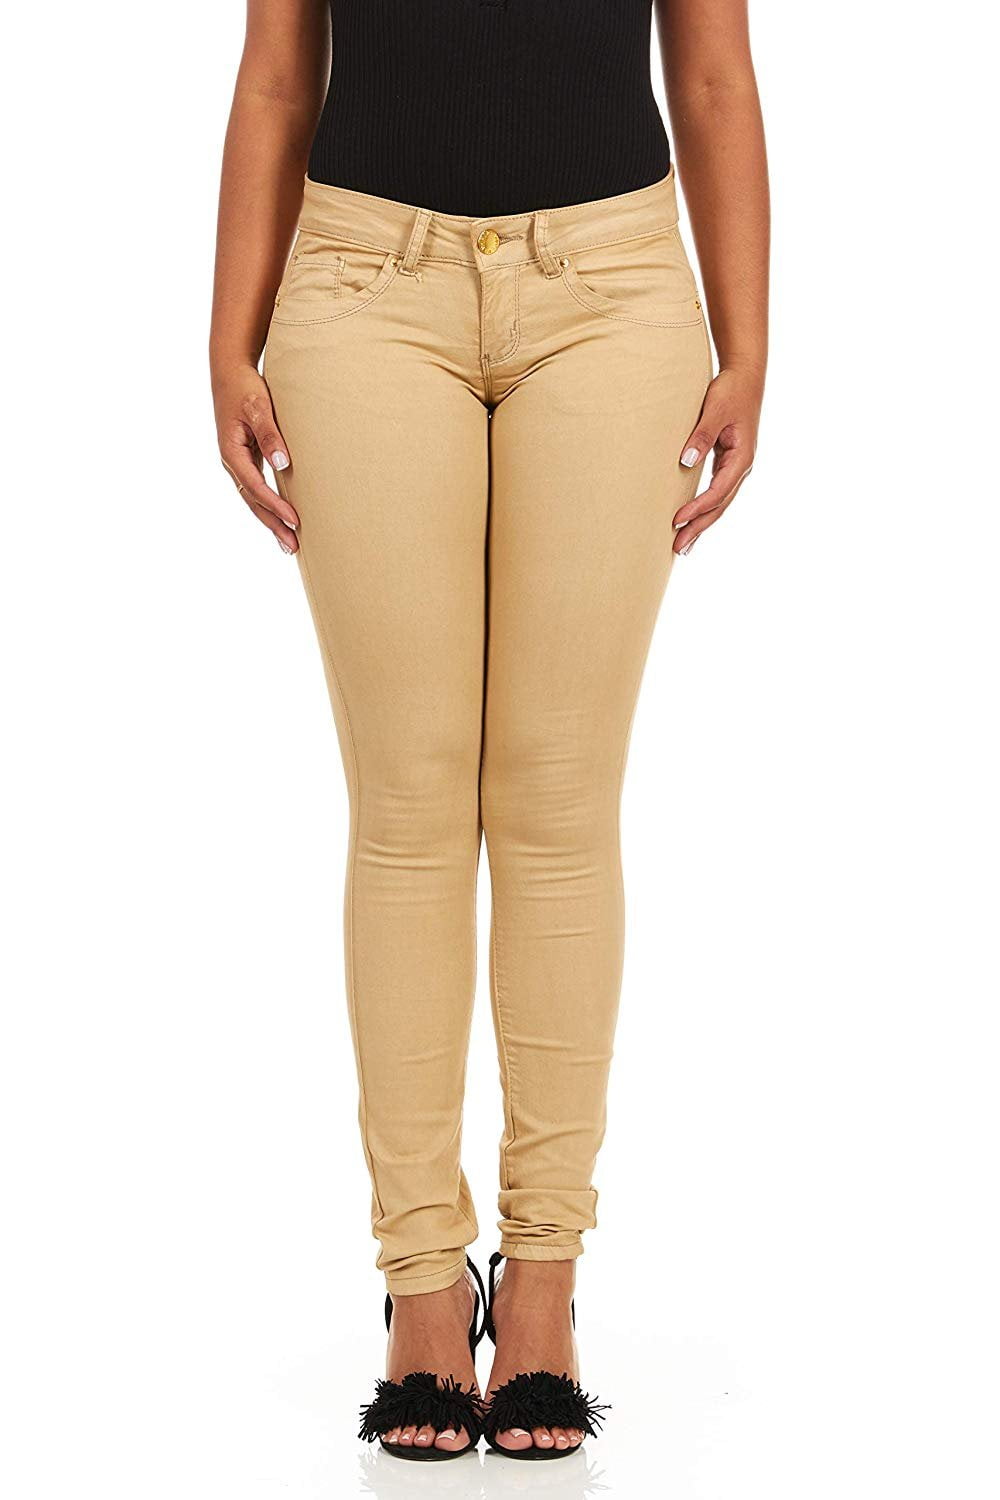 V.I.P.JEANS Plus Size Skinny Jeans Butt Juniors, Khaki 24W - Walmart.com